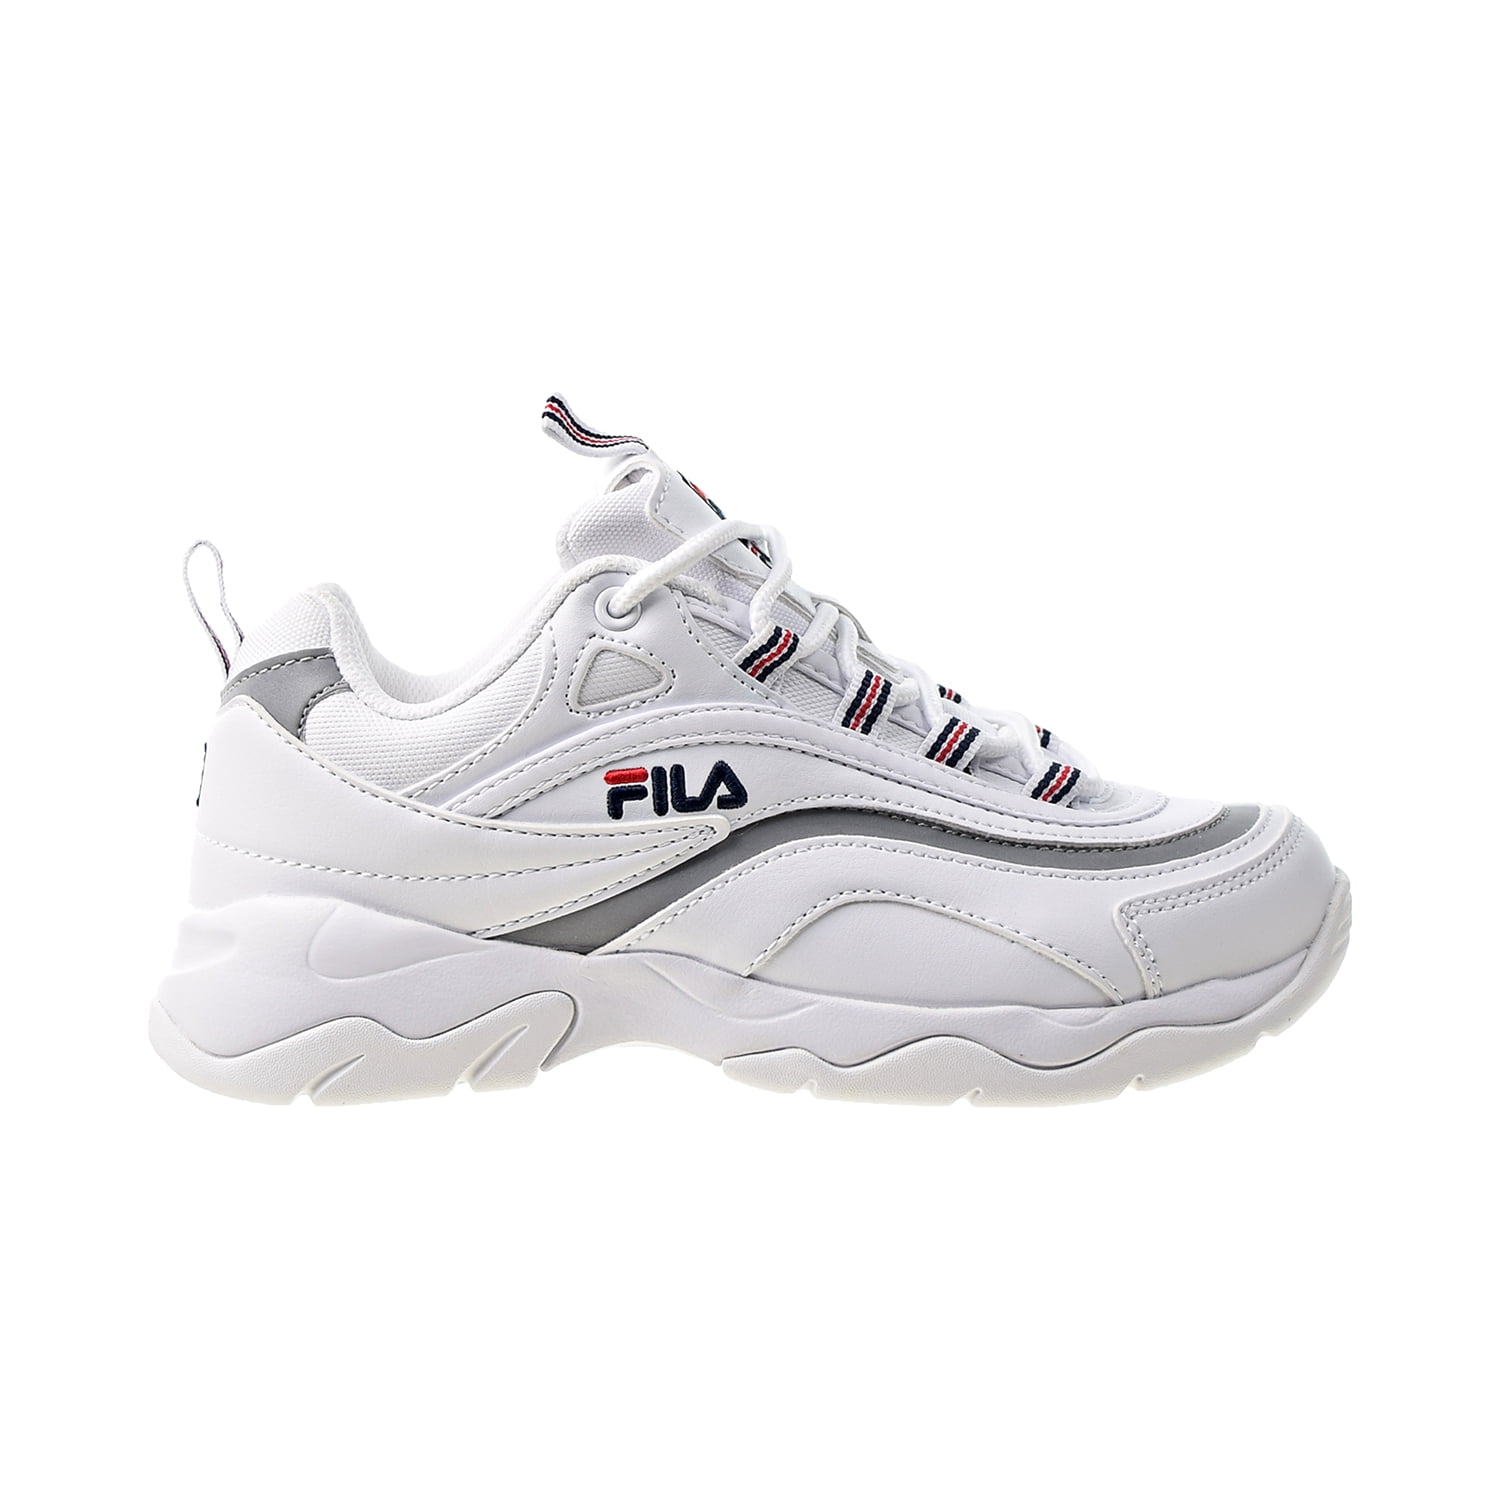 Fila Women's Ray White / Navy Metallic Silver Ankle-High Sneaker - 9.5M ...